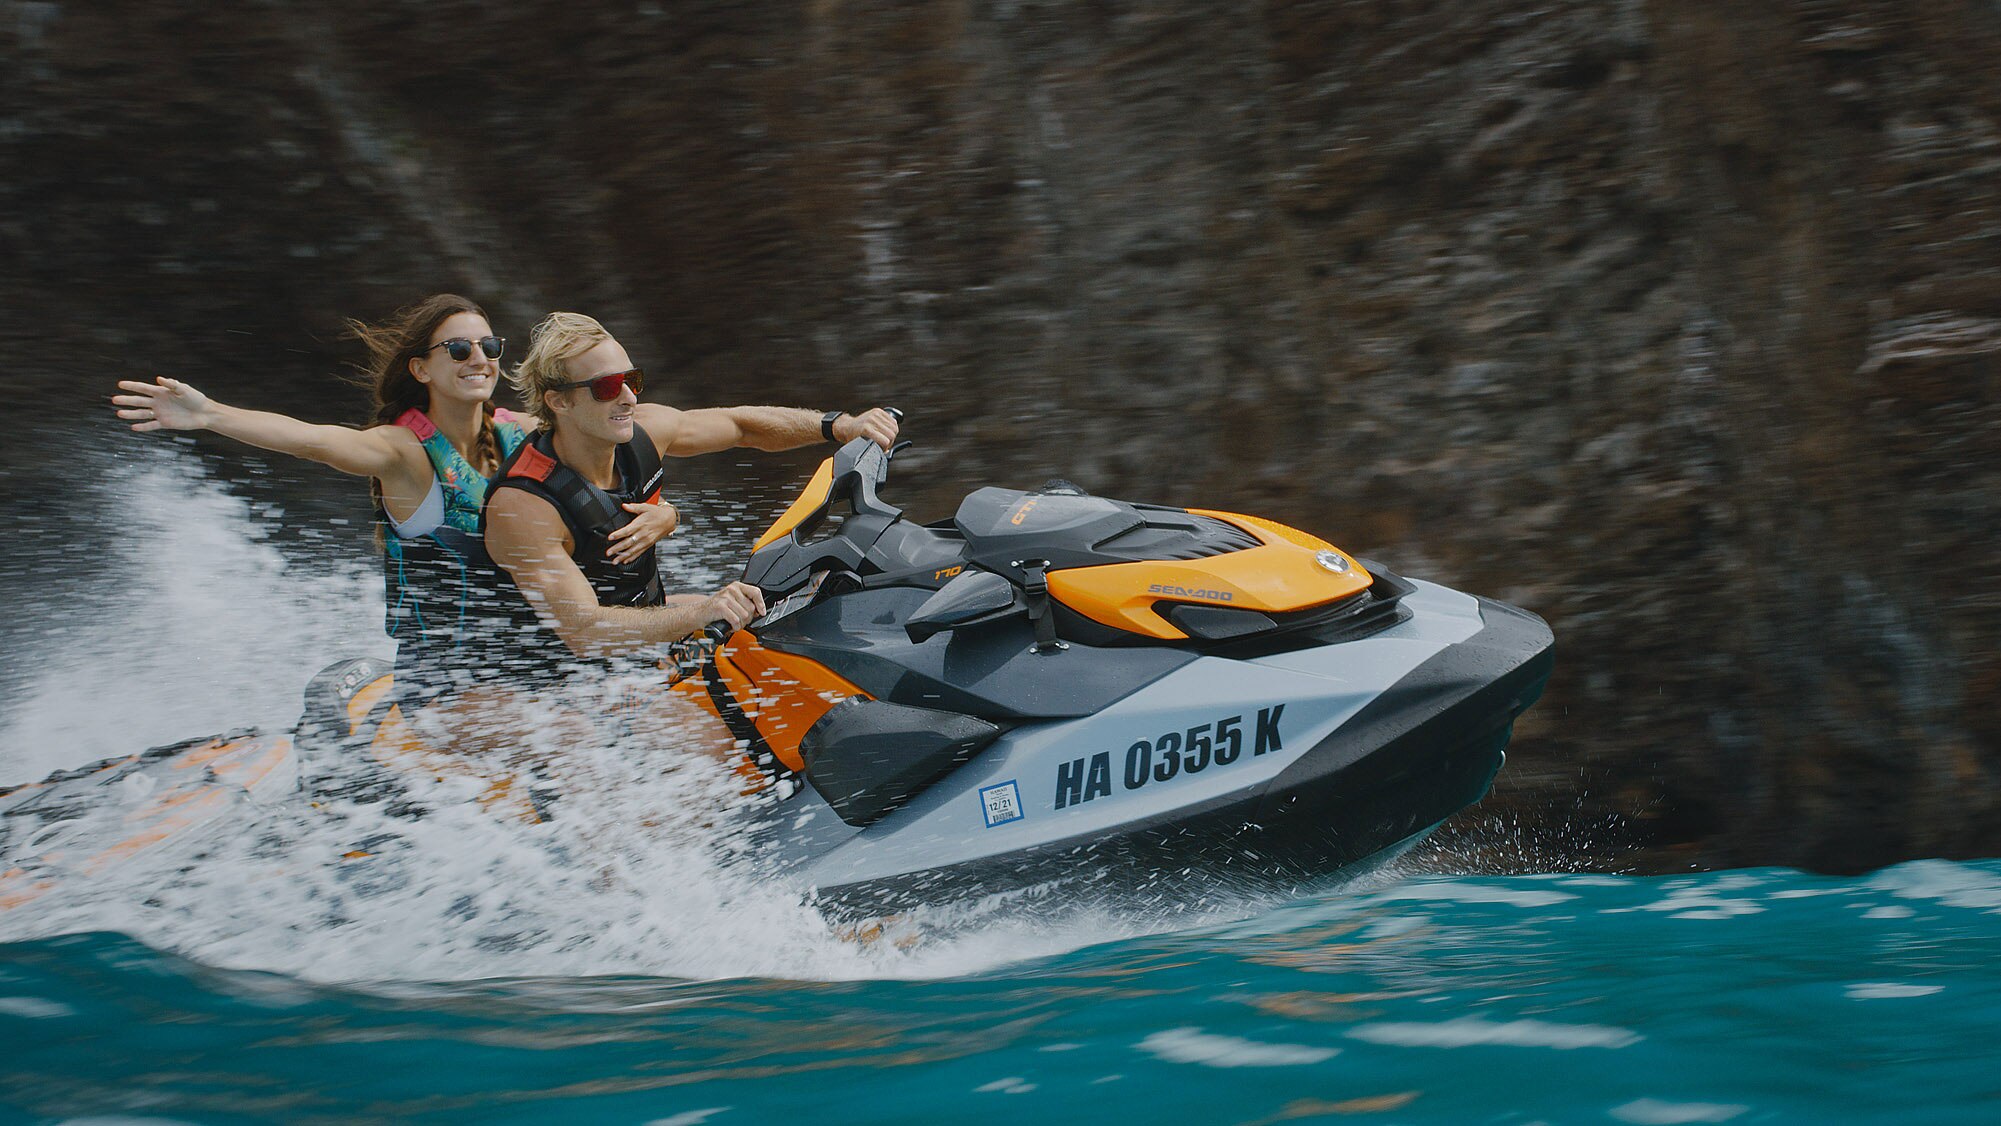 Chris Farro and his girlfriend ridding a Sea-Doo in Hawaii